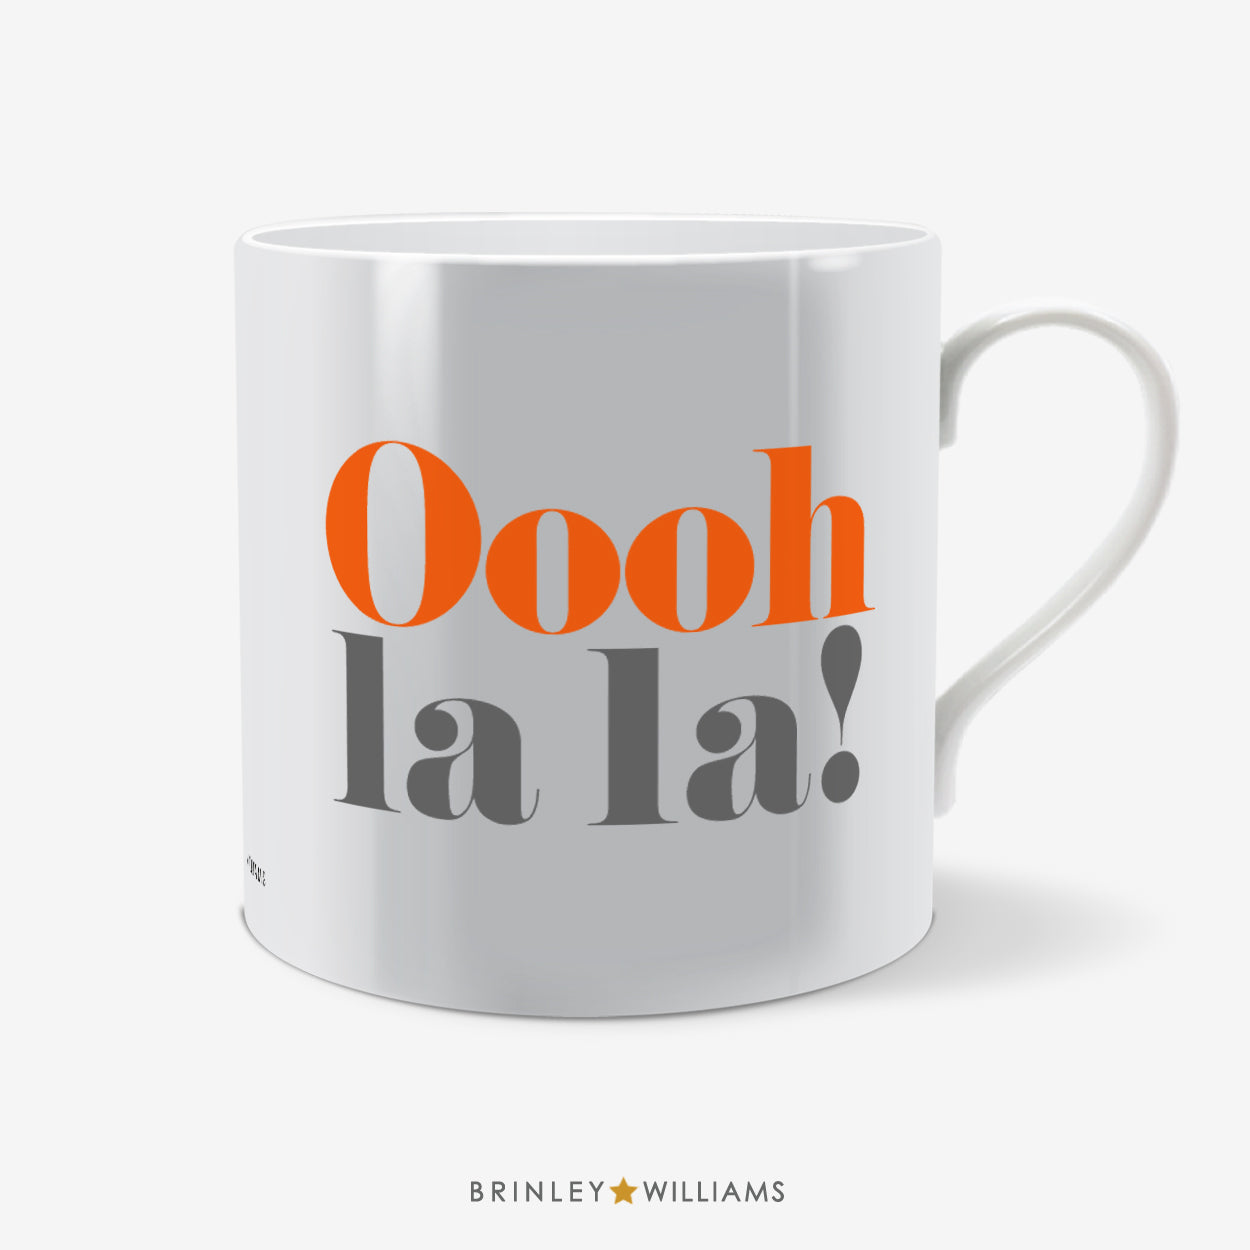 Oooh la la! Fun Mug - Orange